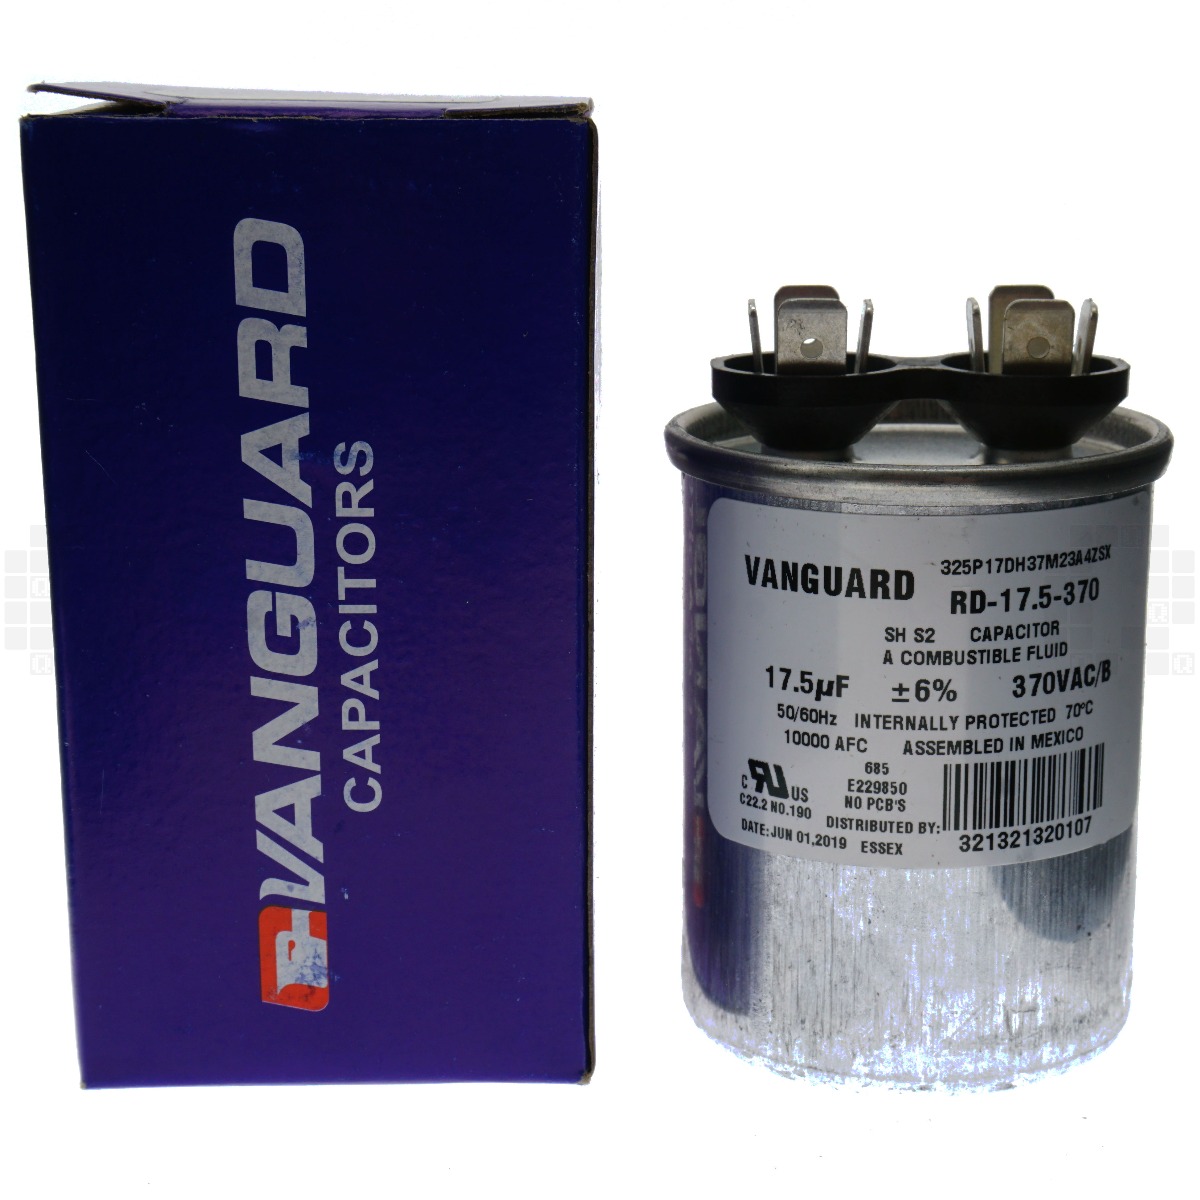 Vanguard RD-17.5-370 Electric Motor Run Capacitor, 17.5 uF, 370 VAC 50-60Hz